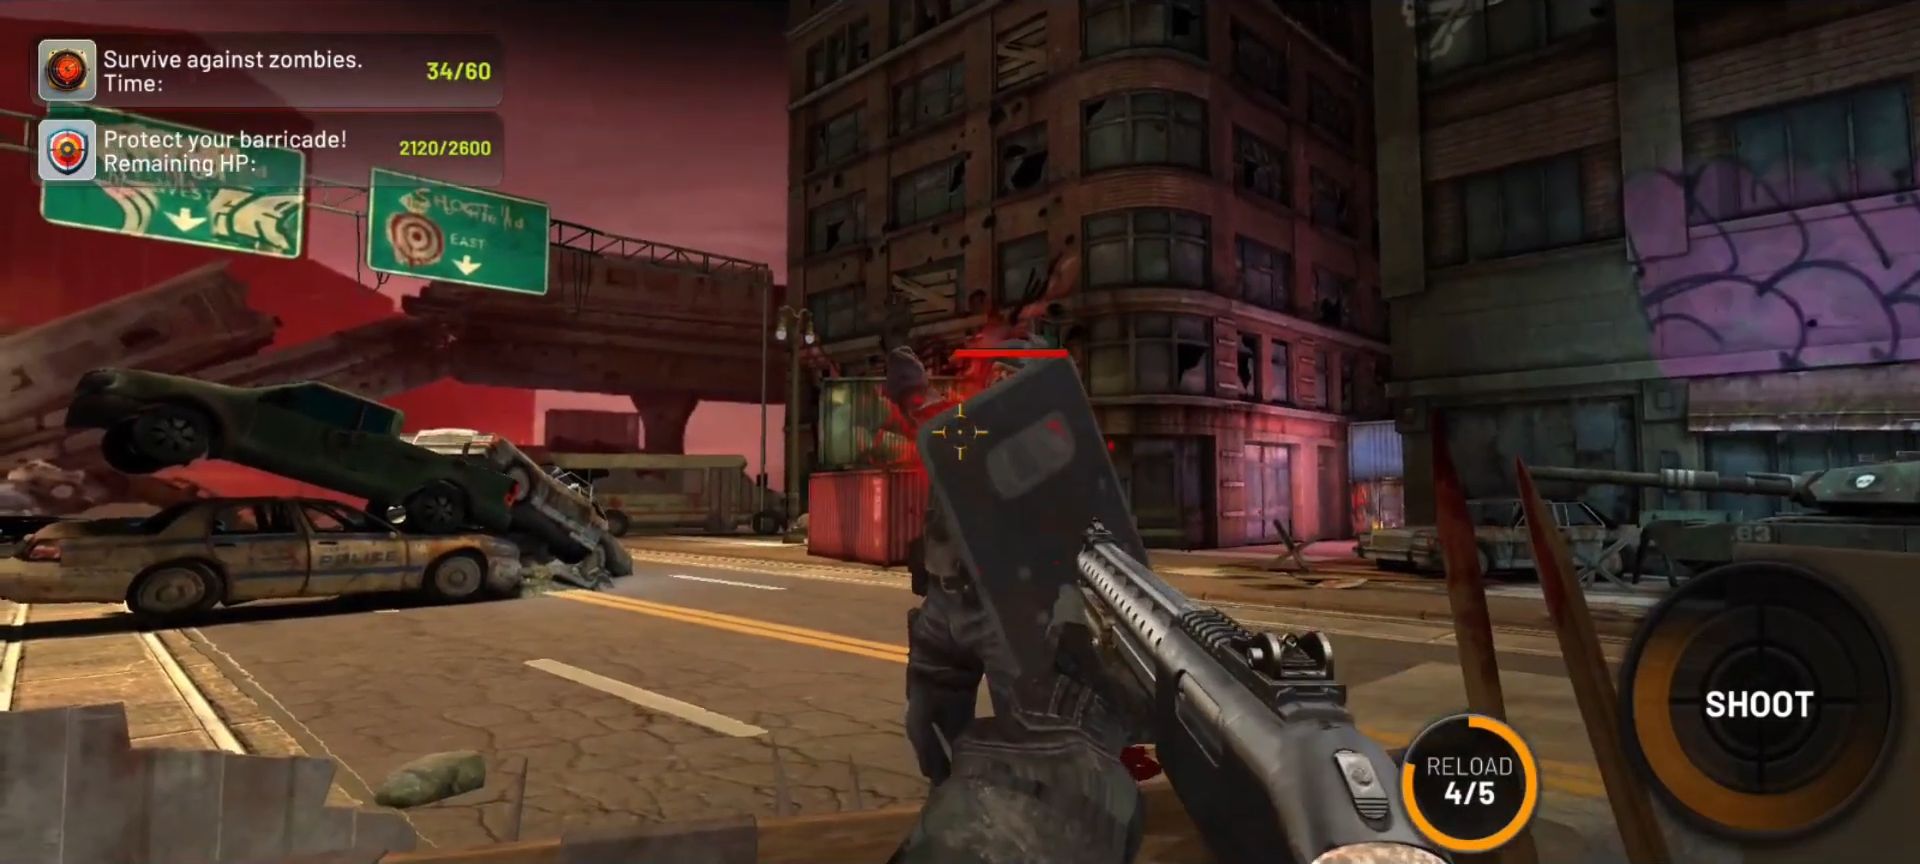 Baixar Deadlander: FPS Zombie Game para Android grátis.